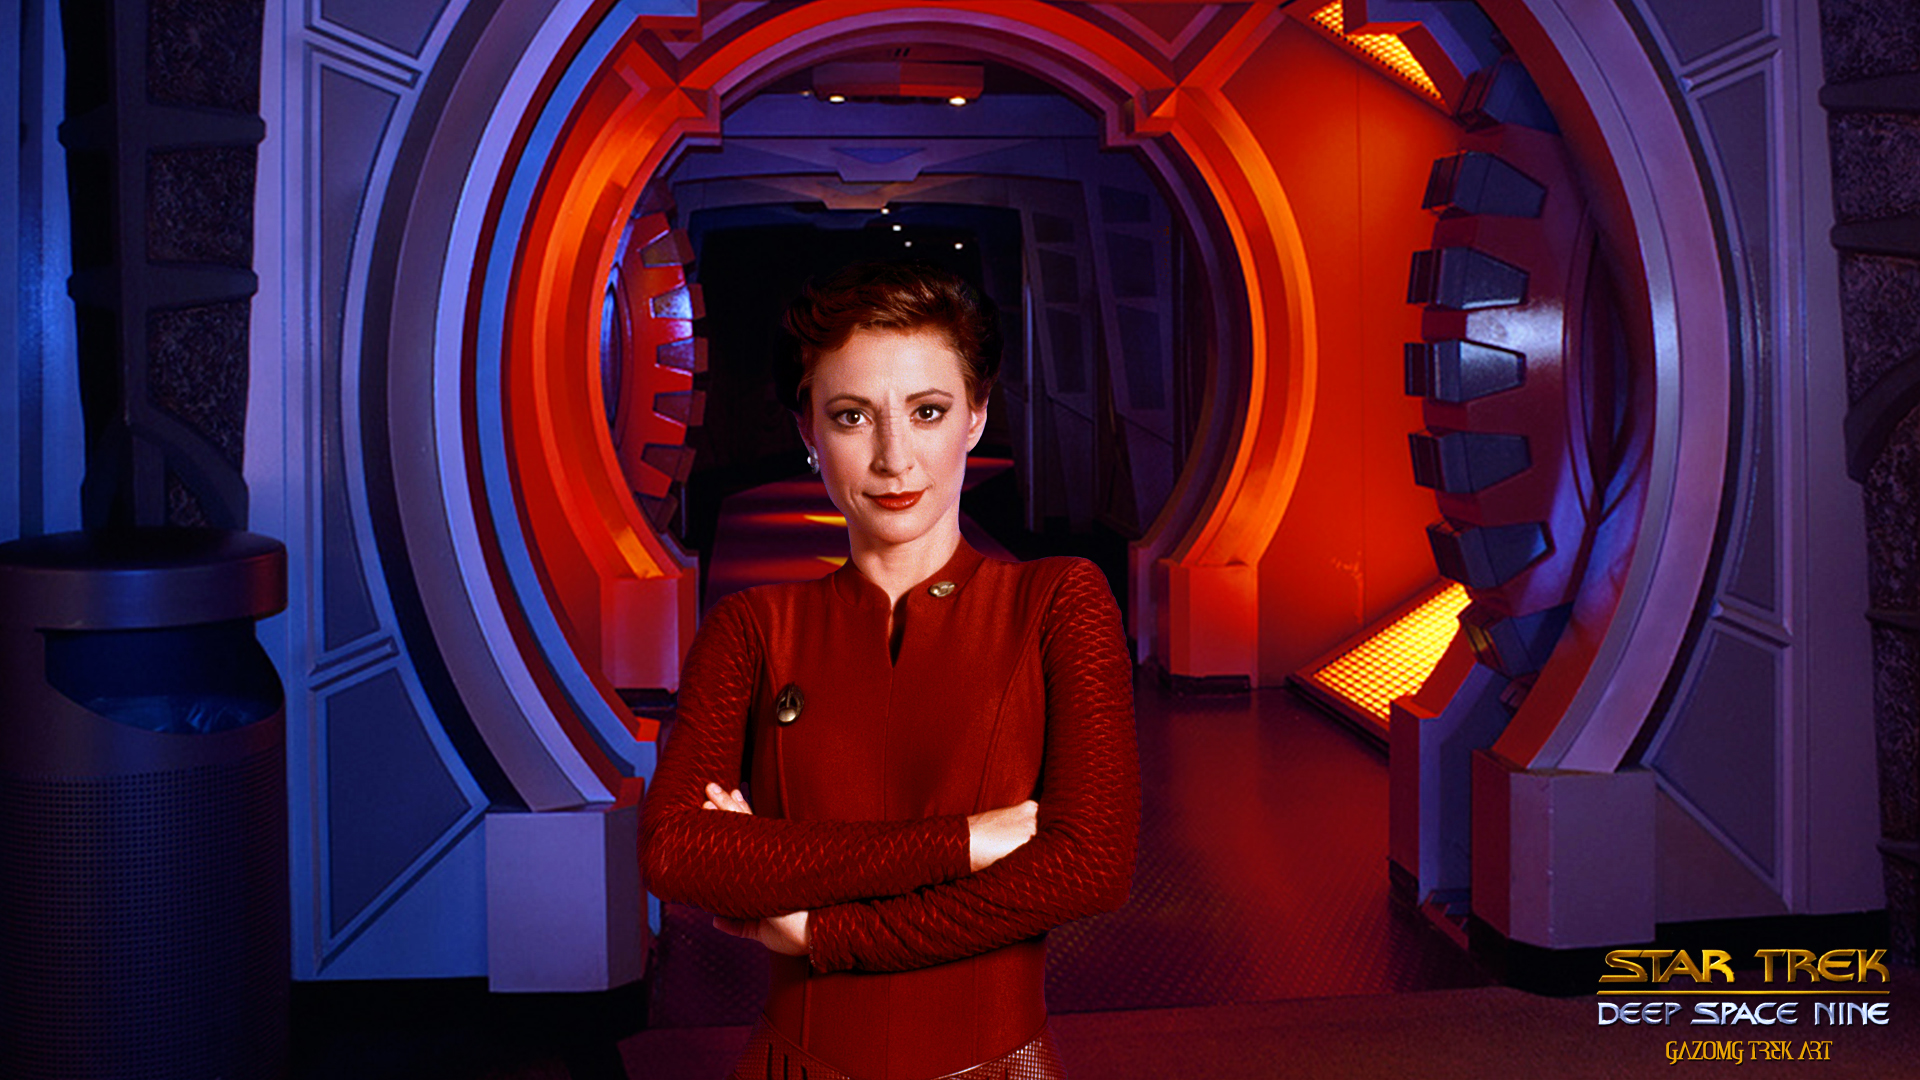 Star Trek Deep Space Nine Crew #9 Major Kira by gazomg on DeviantArt